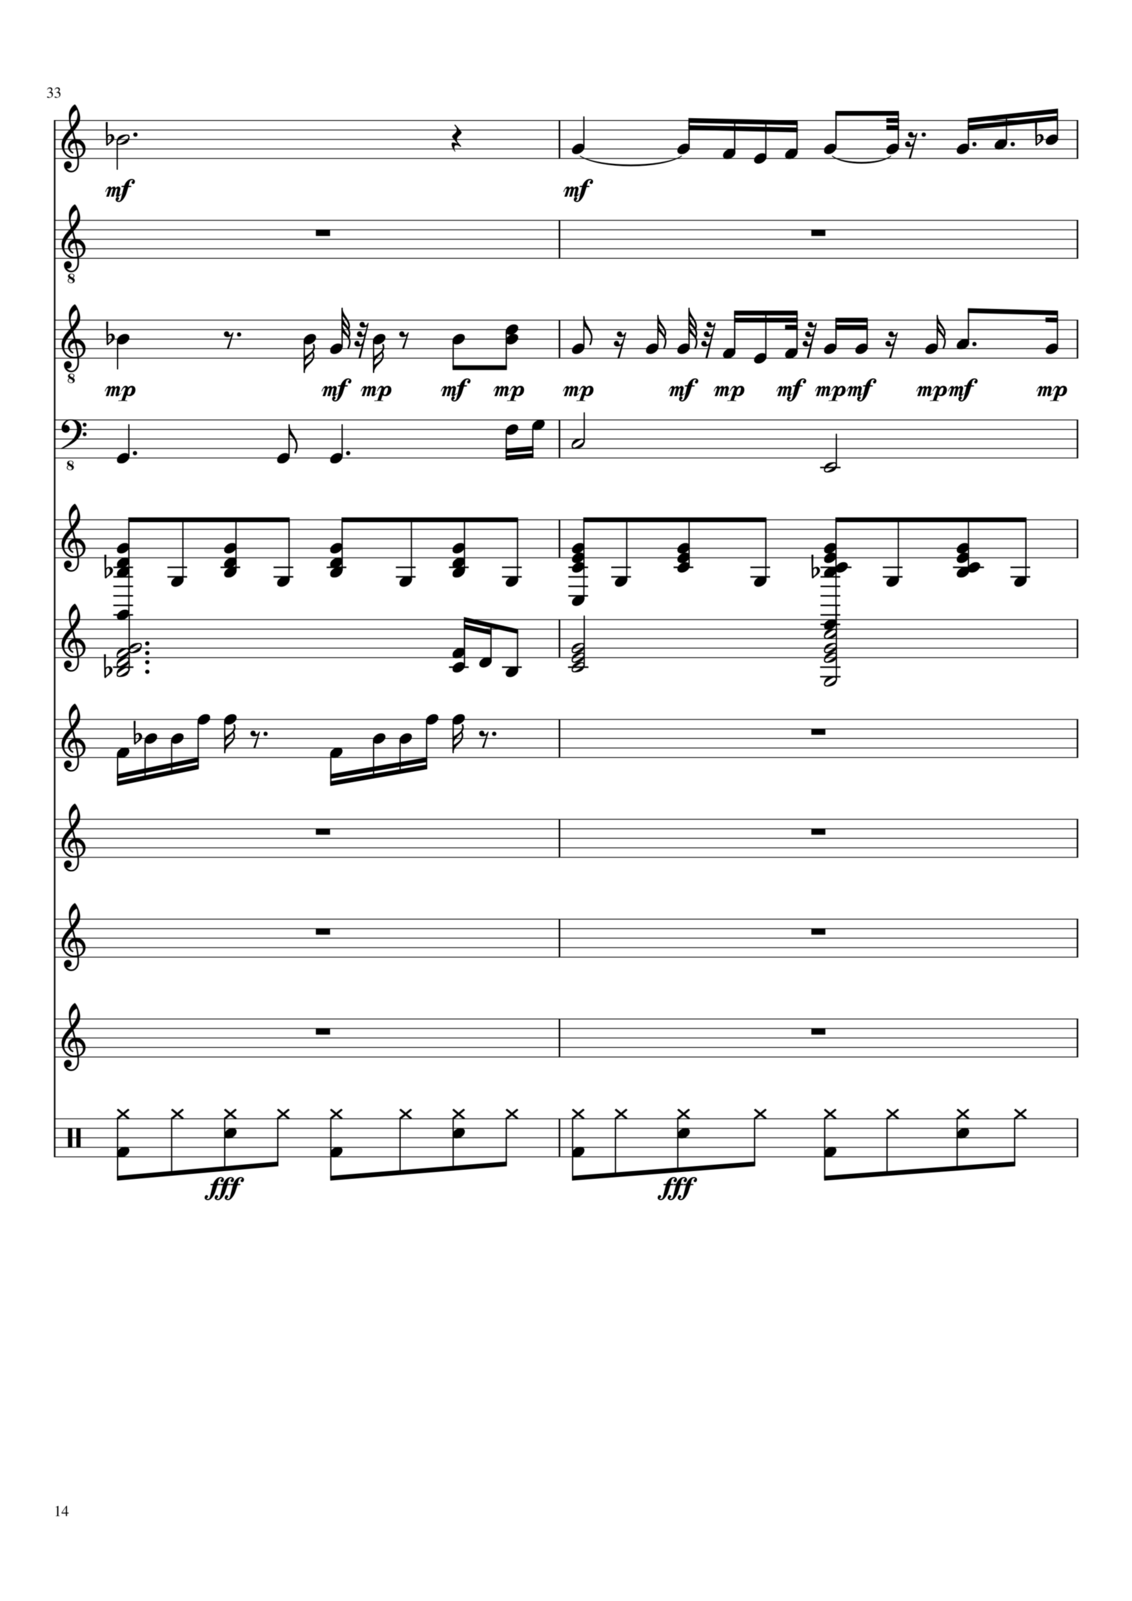 Gorod, kotorogo net slide, Image 14